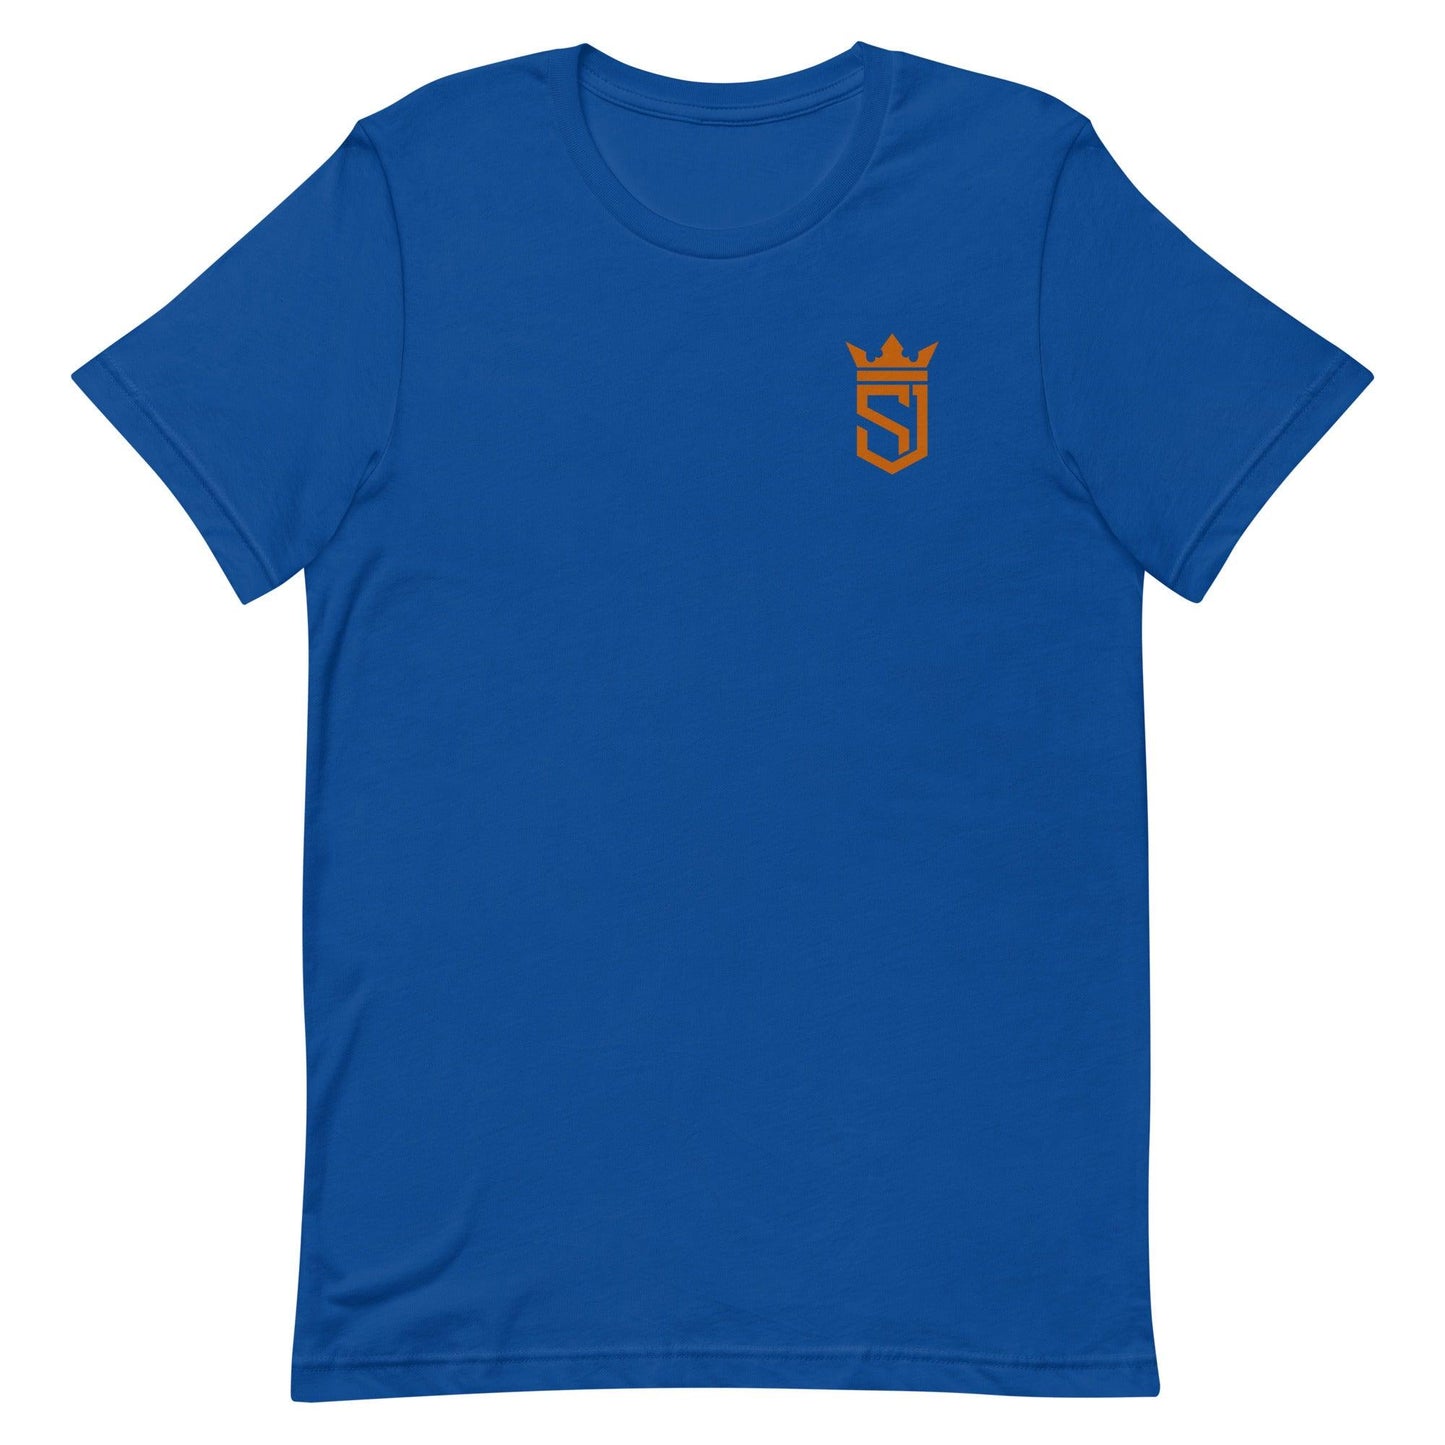 Jatavion Sanders "Royalty" t-shirt - Fan Arch